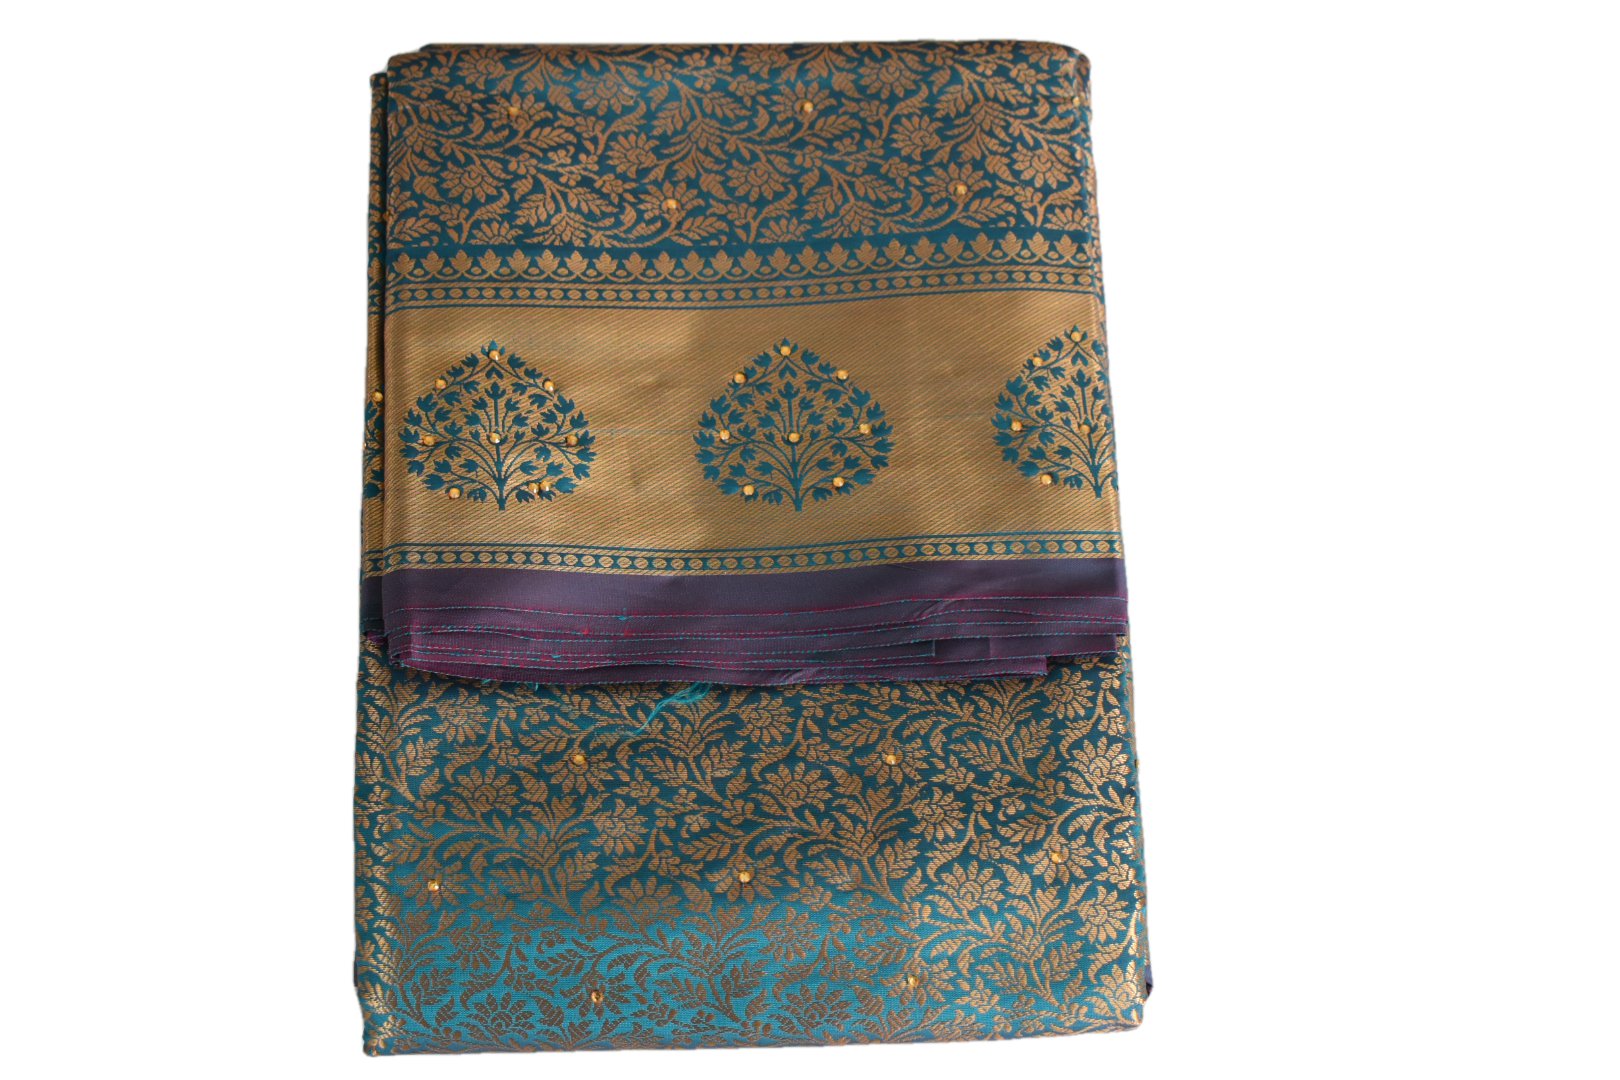 Greenish Blue Color - Silk Saree, Full Gold Zari Floral Design with Minakari stick-on